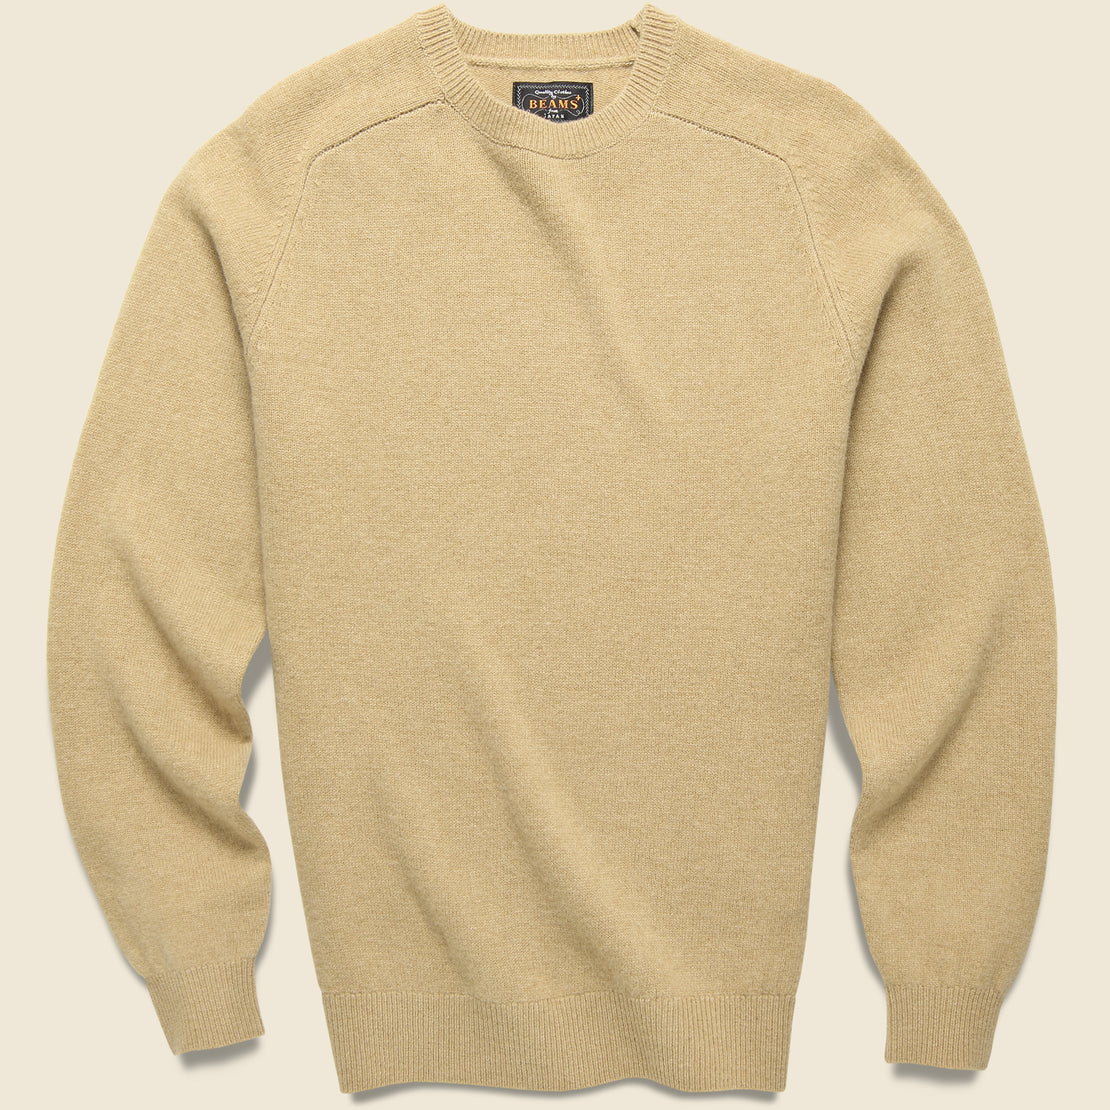 BEAMS+ Merino Crew Sweater - Beige